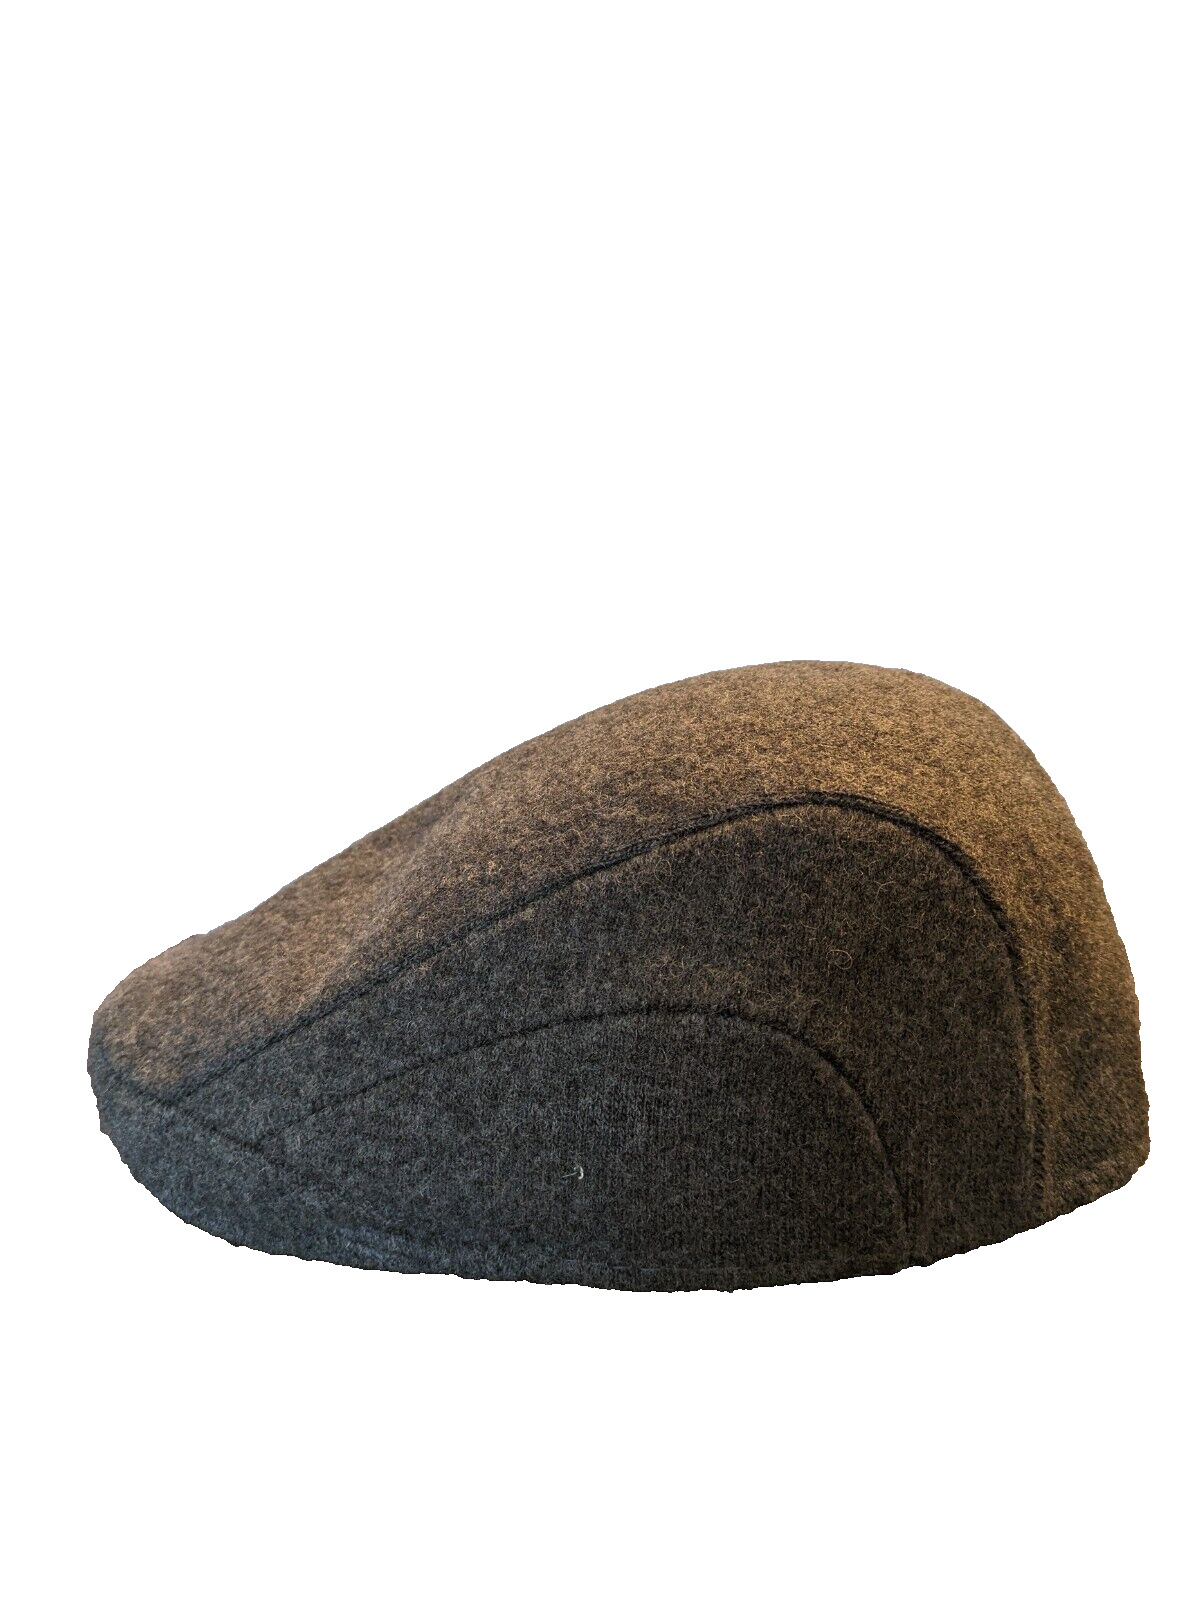 KANGOL Gray Flat Cap *MENS Wool Style 507 *SMALL … - image 5